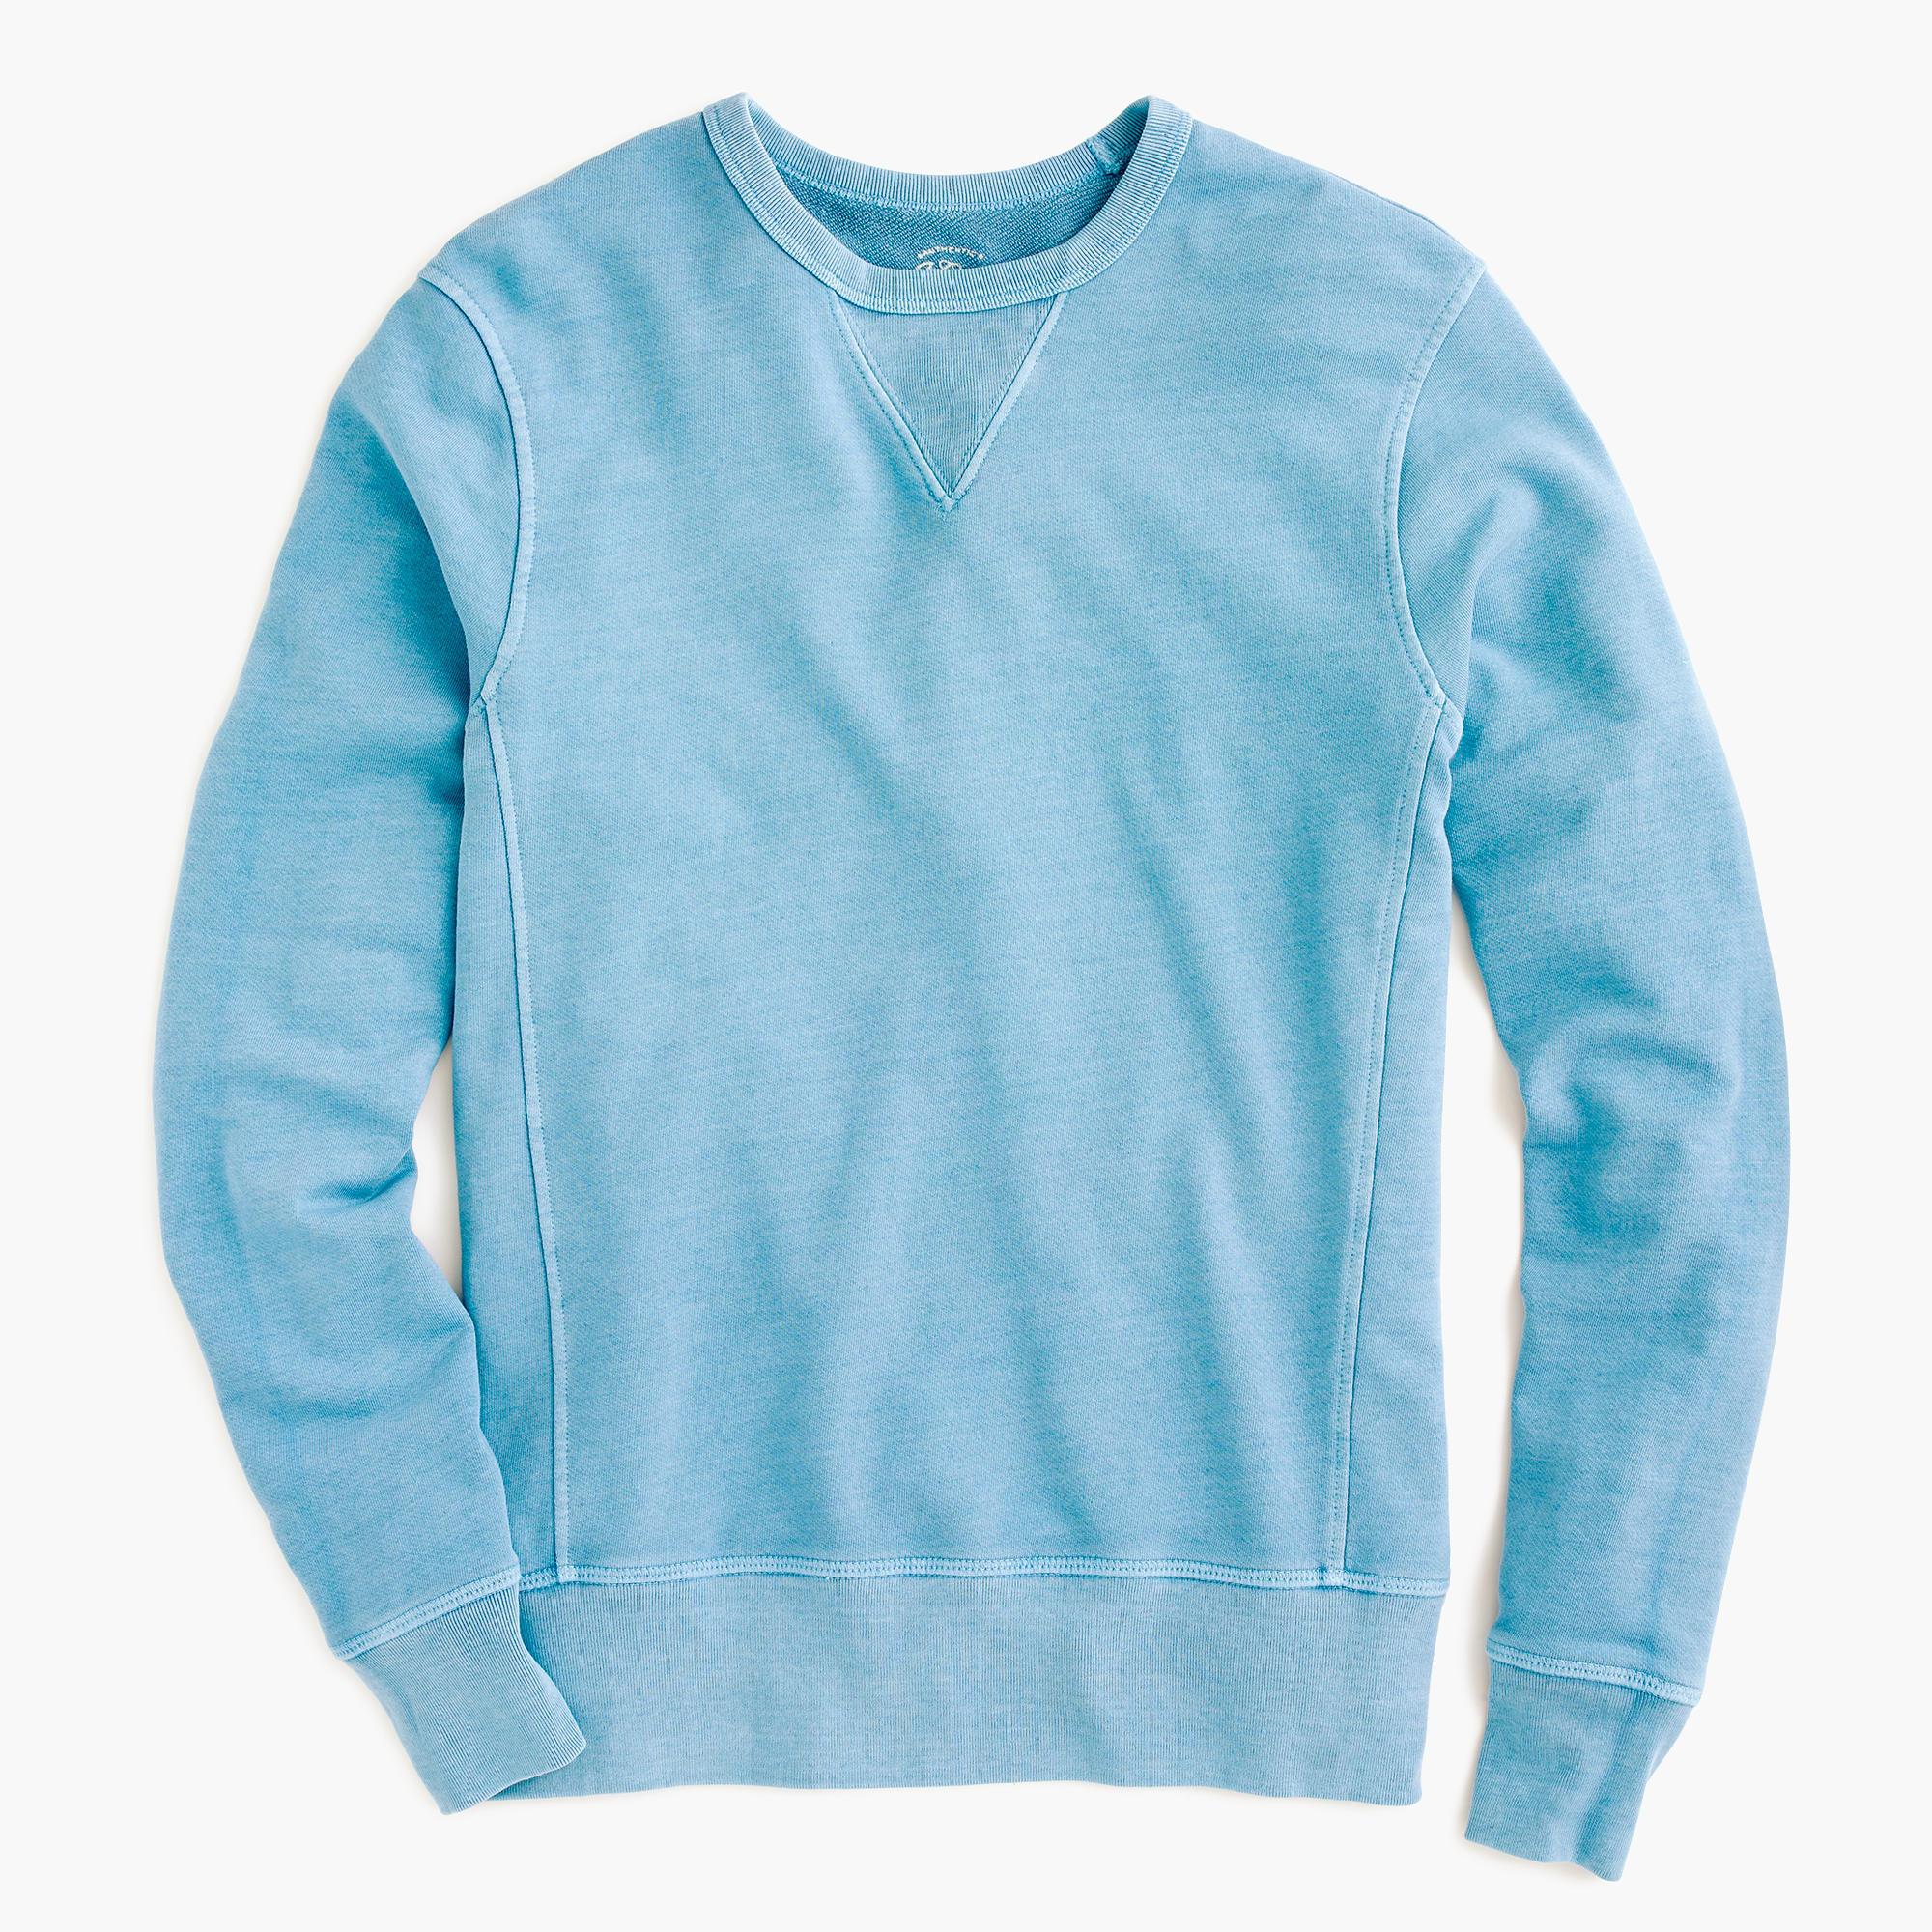 Lyst - J.Crew Garment-dyed Crewneck Sweatshirt in Blue for Men